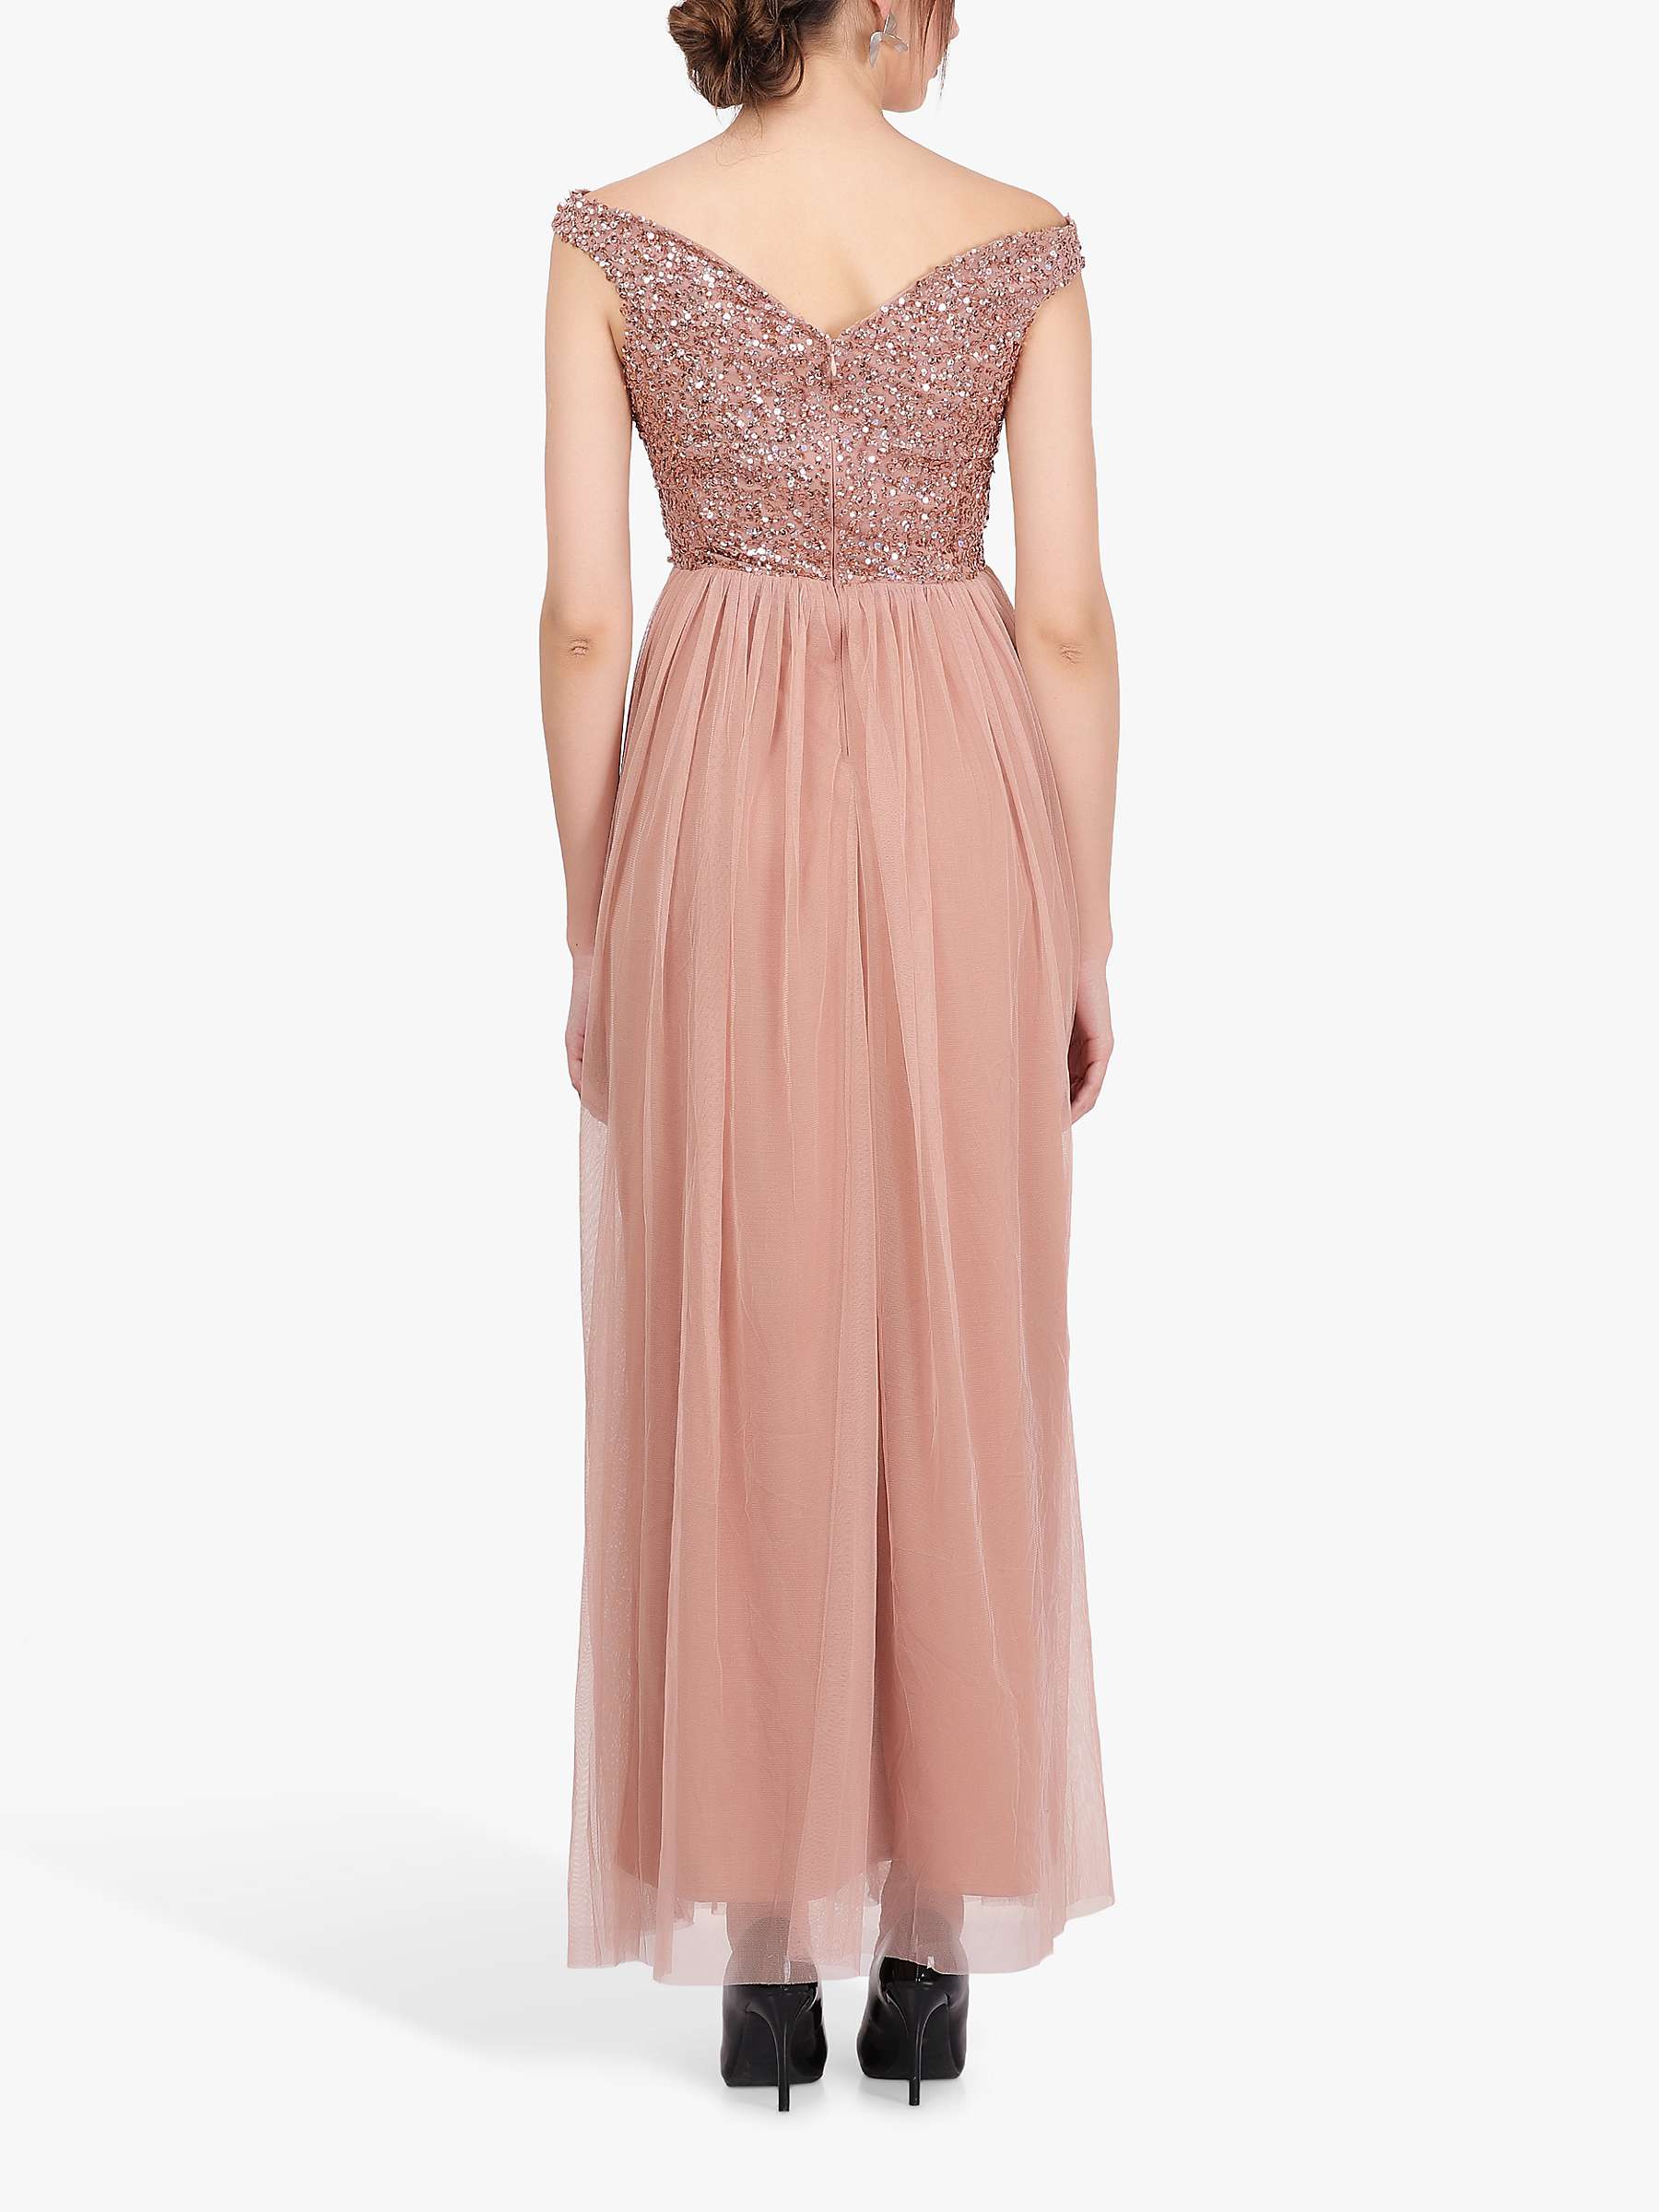 Buy Lace & Beads Nina Embellished Maxi Dress,Taupe Online at johnlewis.com